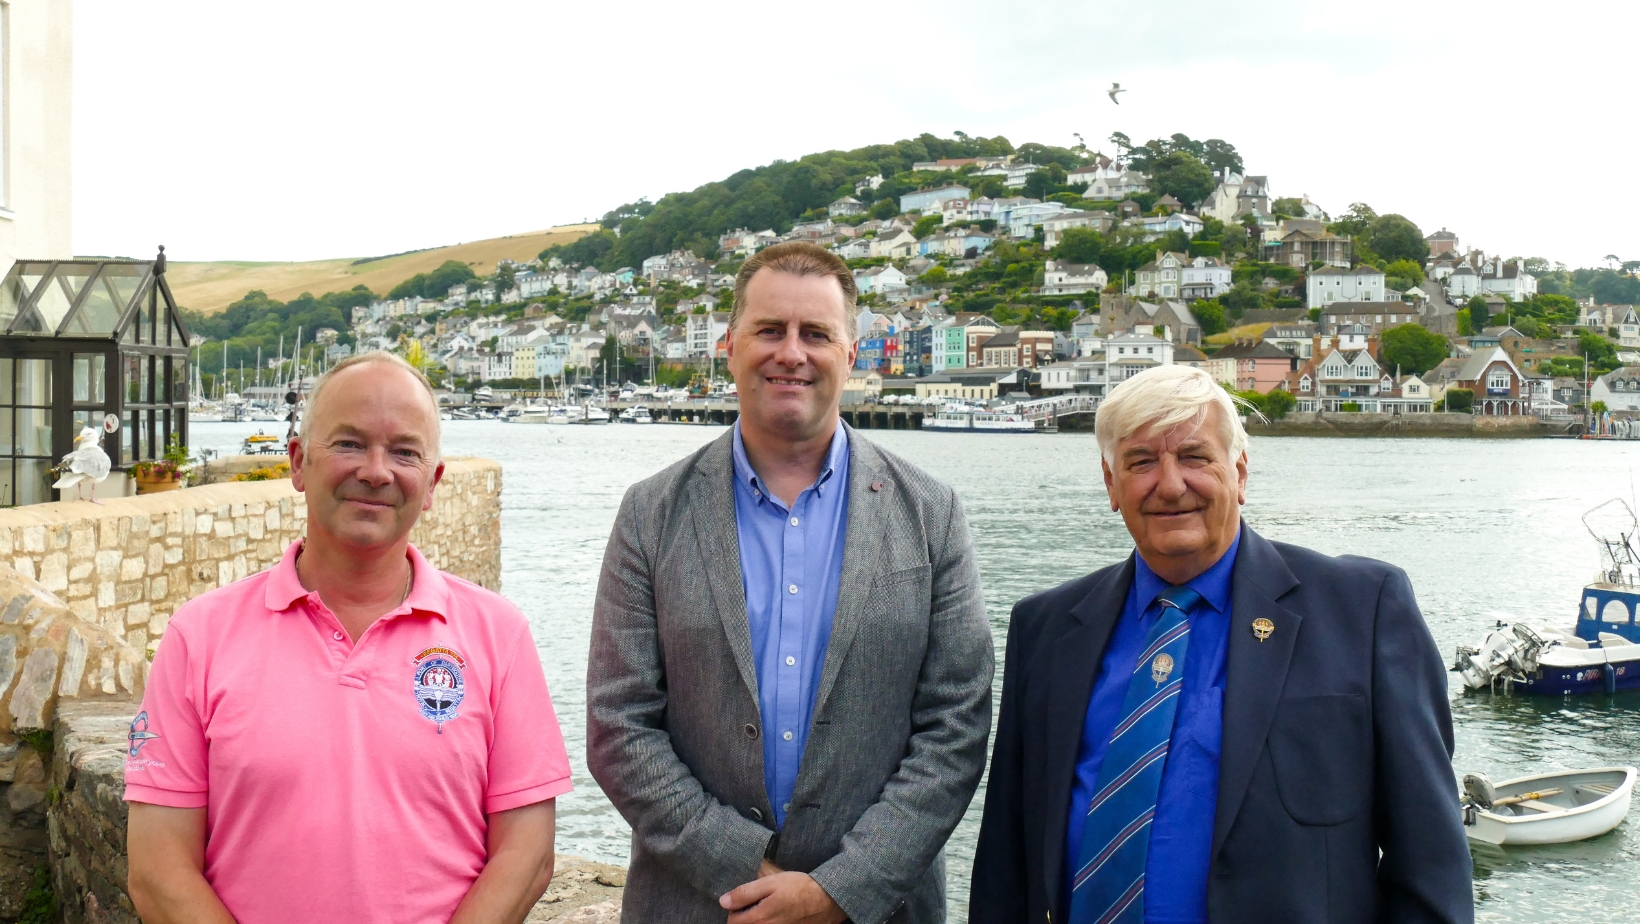 Baker Estates announces its Platinum sponsorship of the Port of Dartmouth Royal Regatta